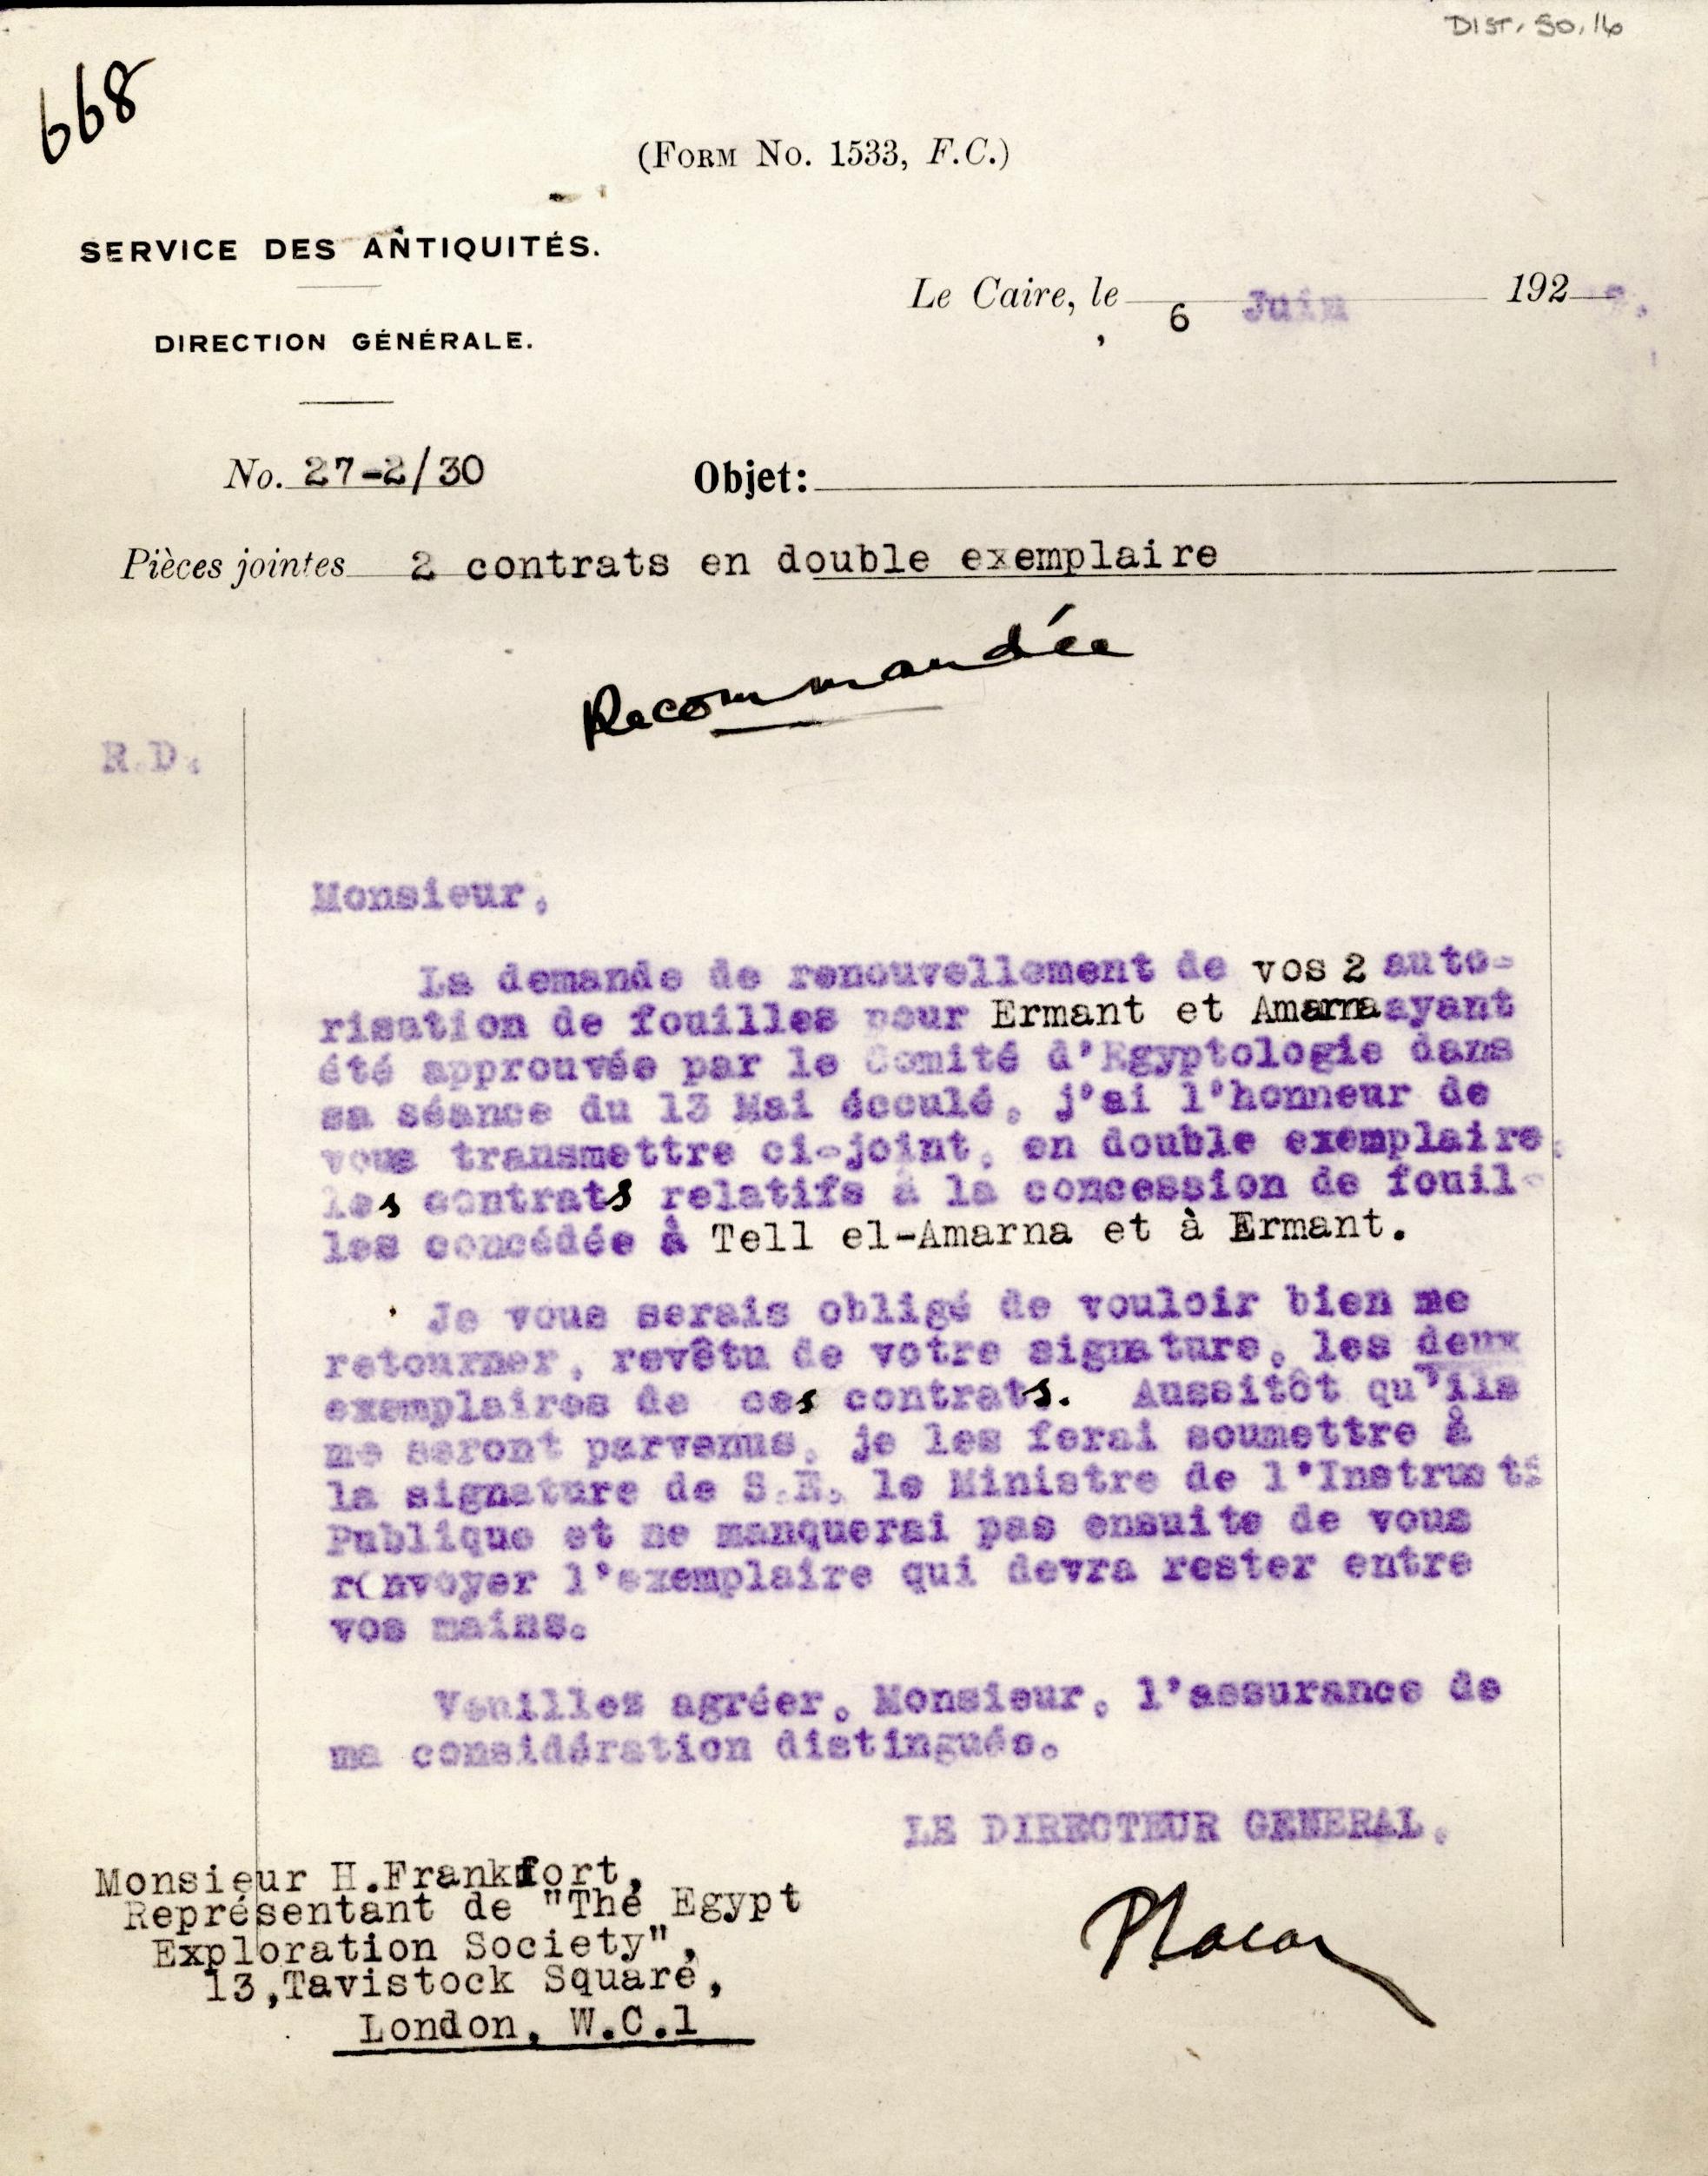 1926-39 correspondence with Antiquities Service DIST.50.16